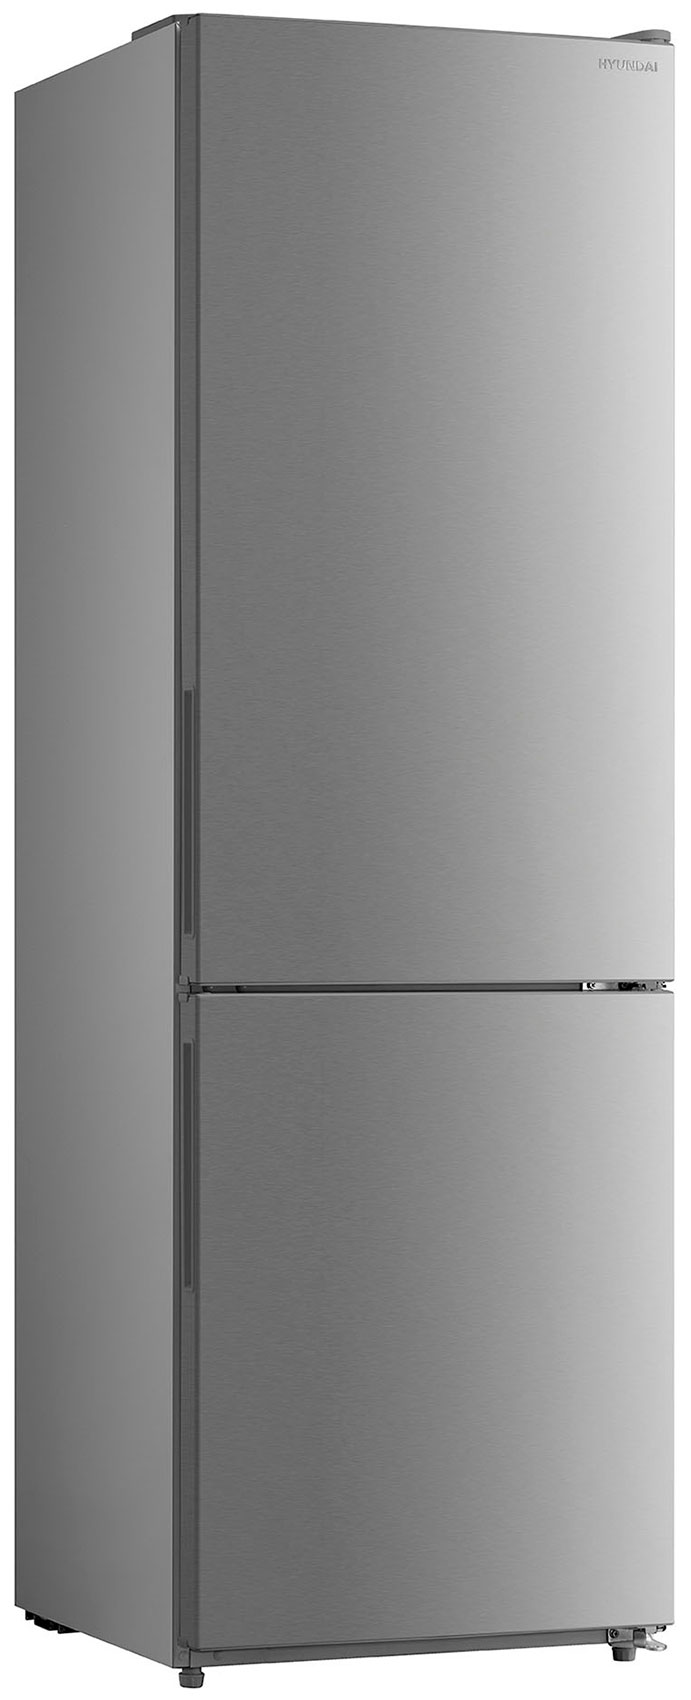 Двухкамерный холодильник Hyundai CC3093FIX нержавеющая сталь induktsionnaya varochnaya poverkhnost franke fhfb 302 2i t